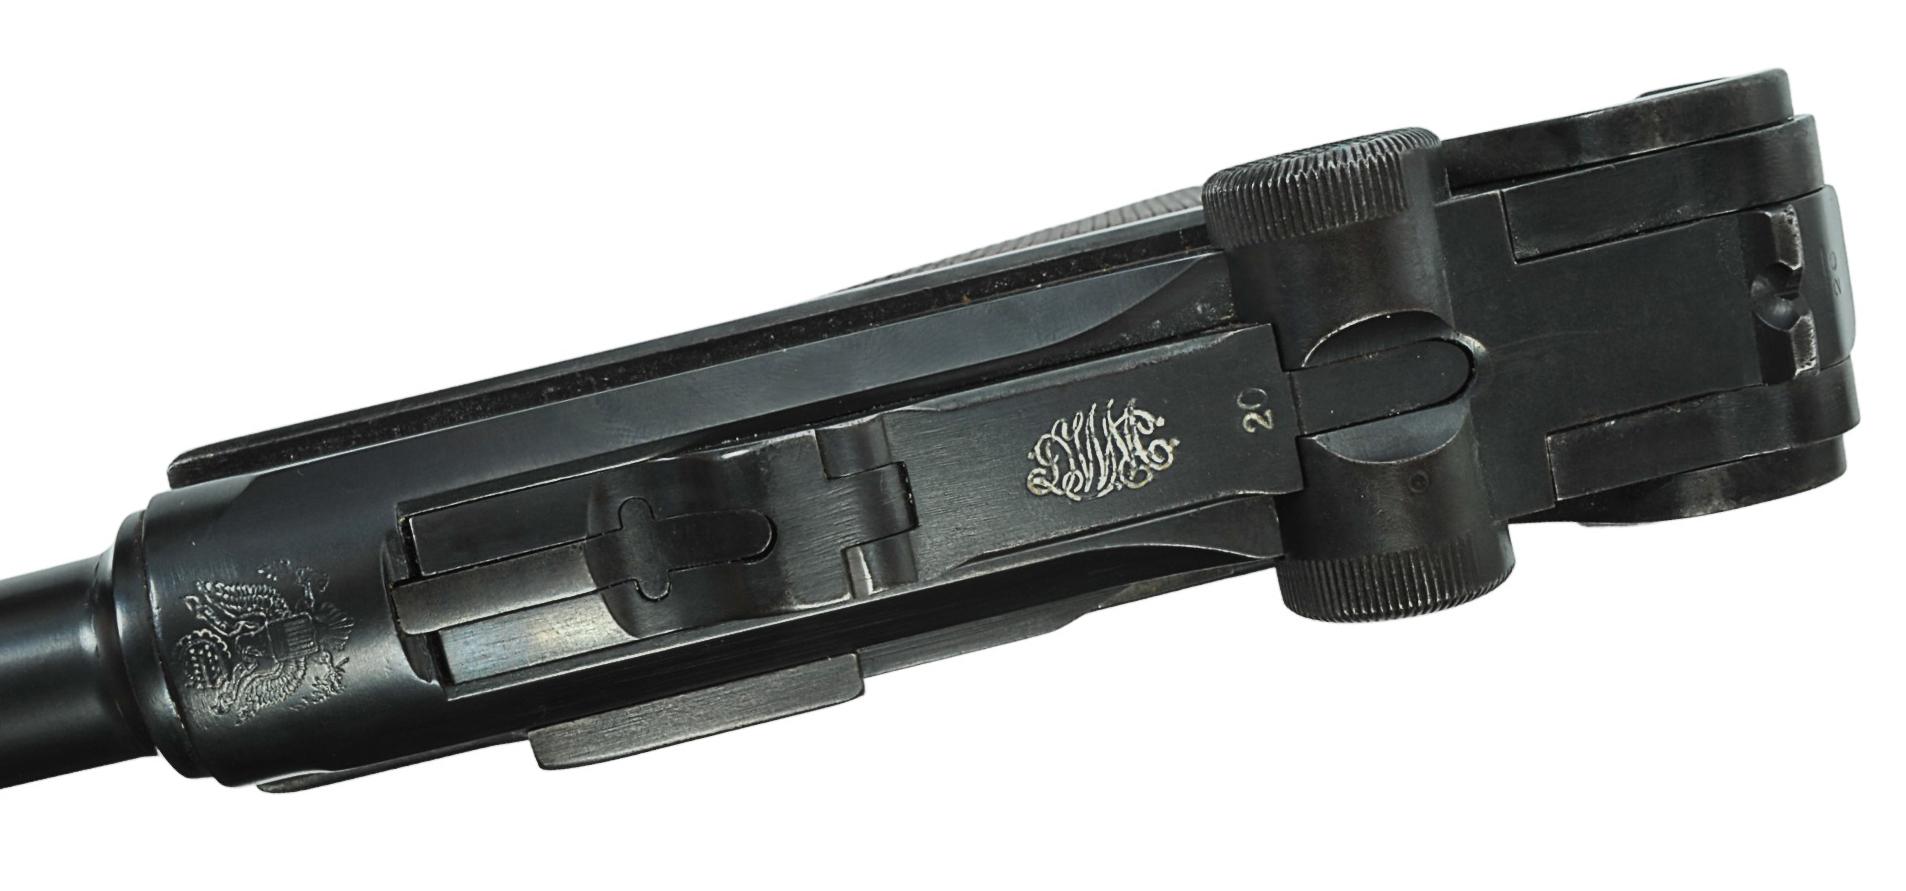 American Eagle M1906 Luger 9MM Semi-auto Pistol With Rare Swiss Barrel FFL Required 54620 (MPL1)